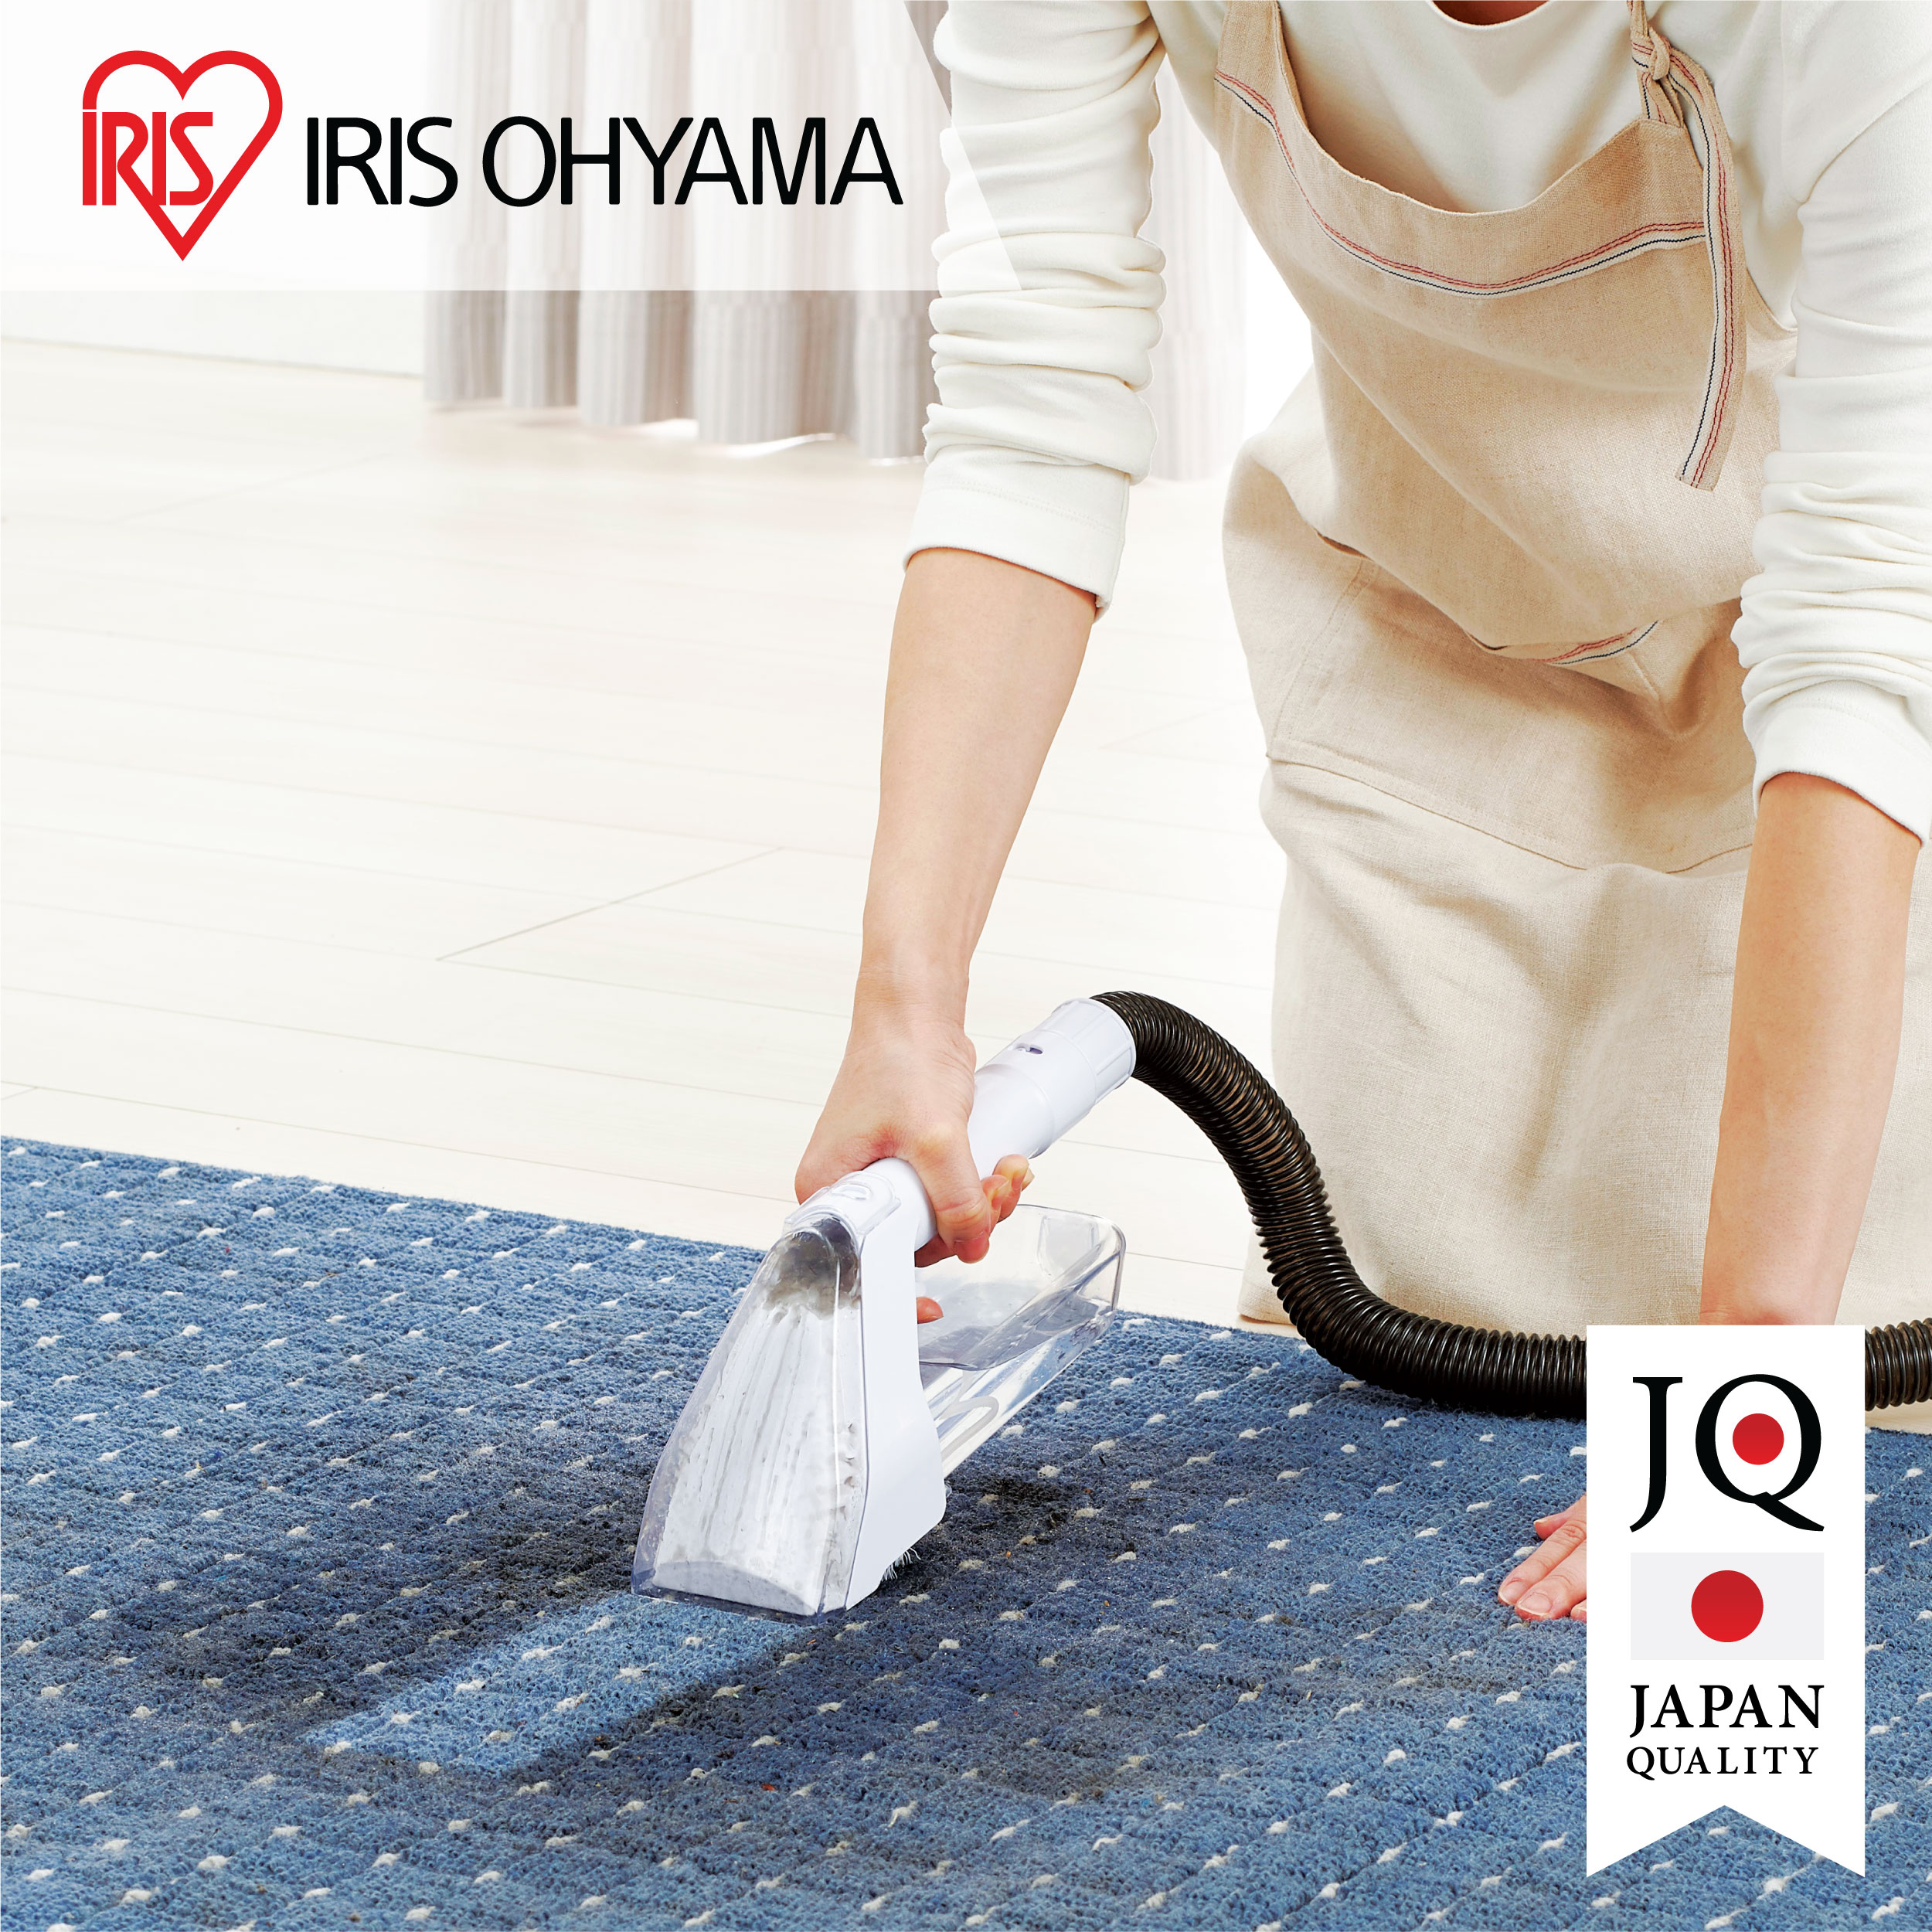 Iris Ohyama RNS-300 Rinser Cleaner Carpet Cleaner – WAFUU JAPAN